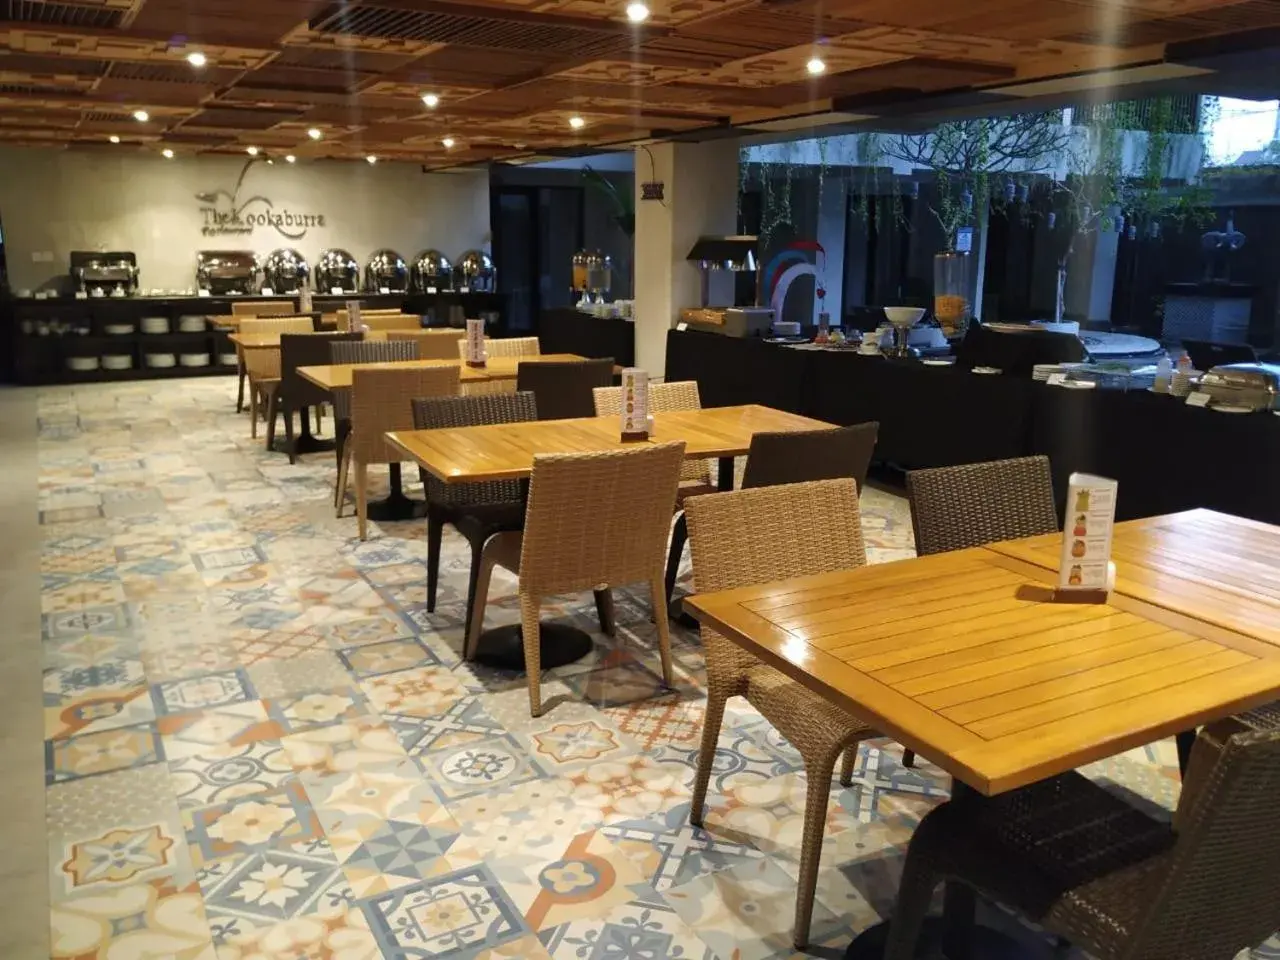 Restaurant/Places to Eat in Serela Legian by KAGUM Hotels